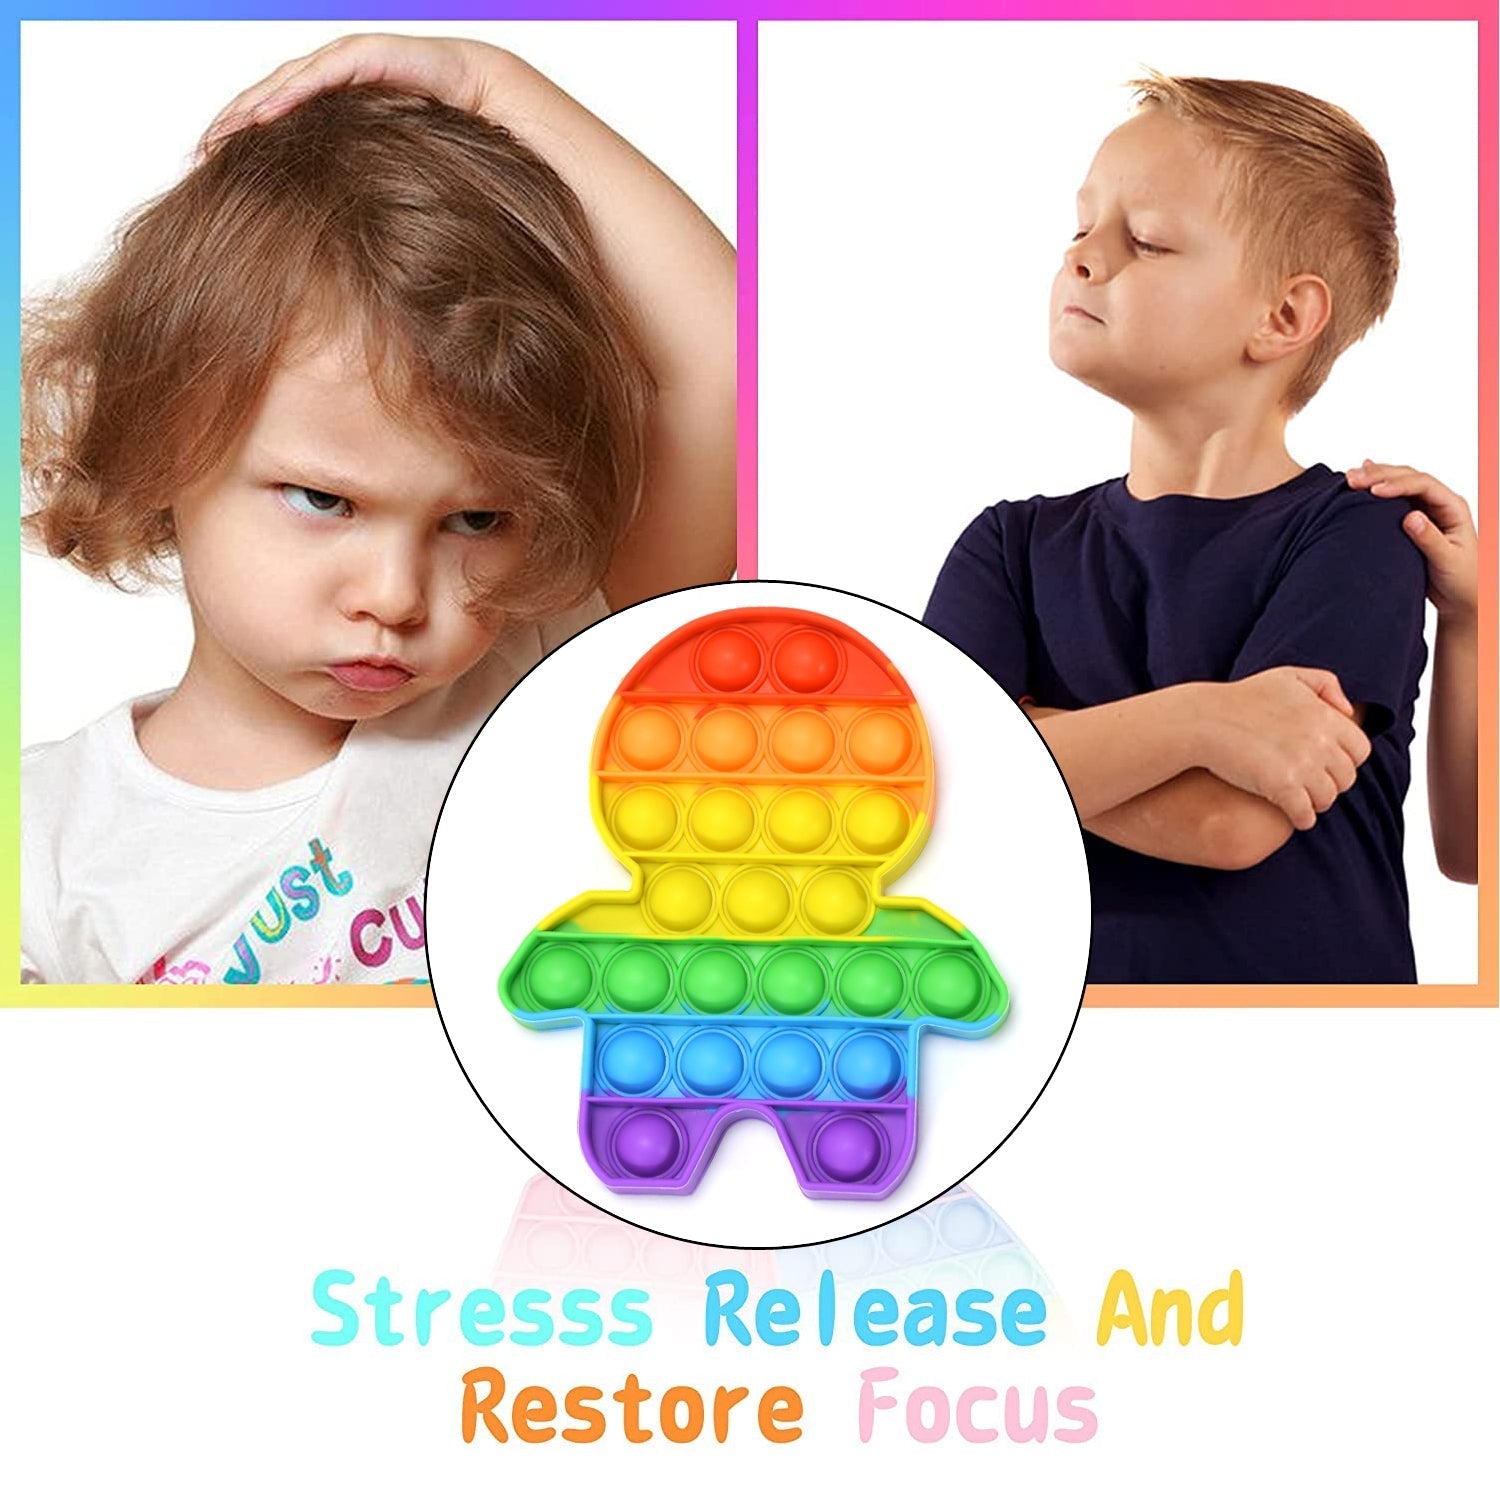 4477 Human Pop It Fidget Push Pop Bubble Fidget Sensory Silicone Stress Relief Sensory Toy for Kids and Adults DeoDap